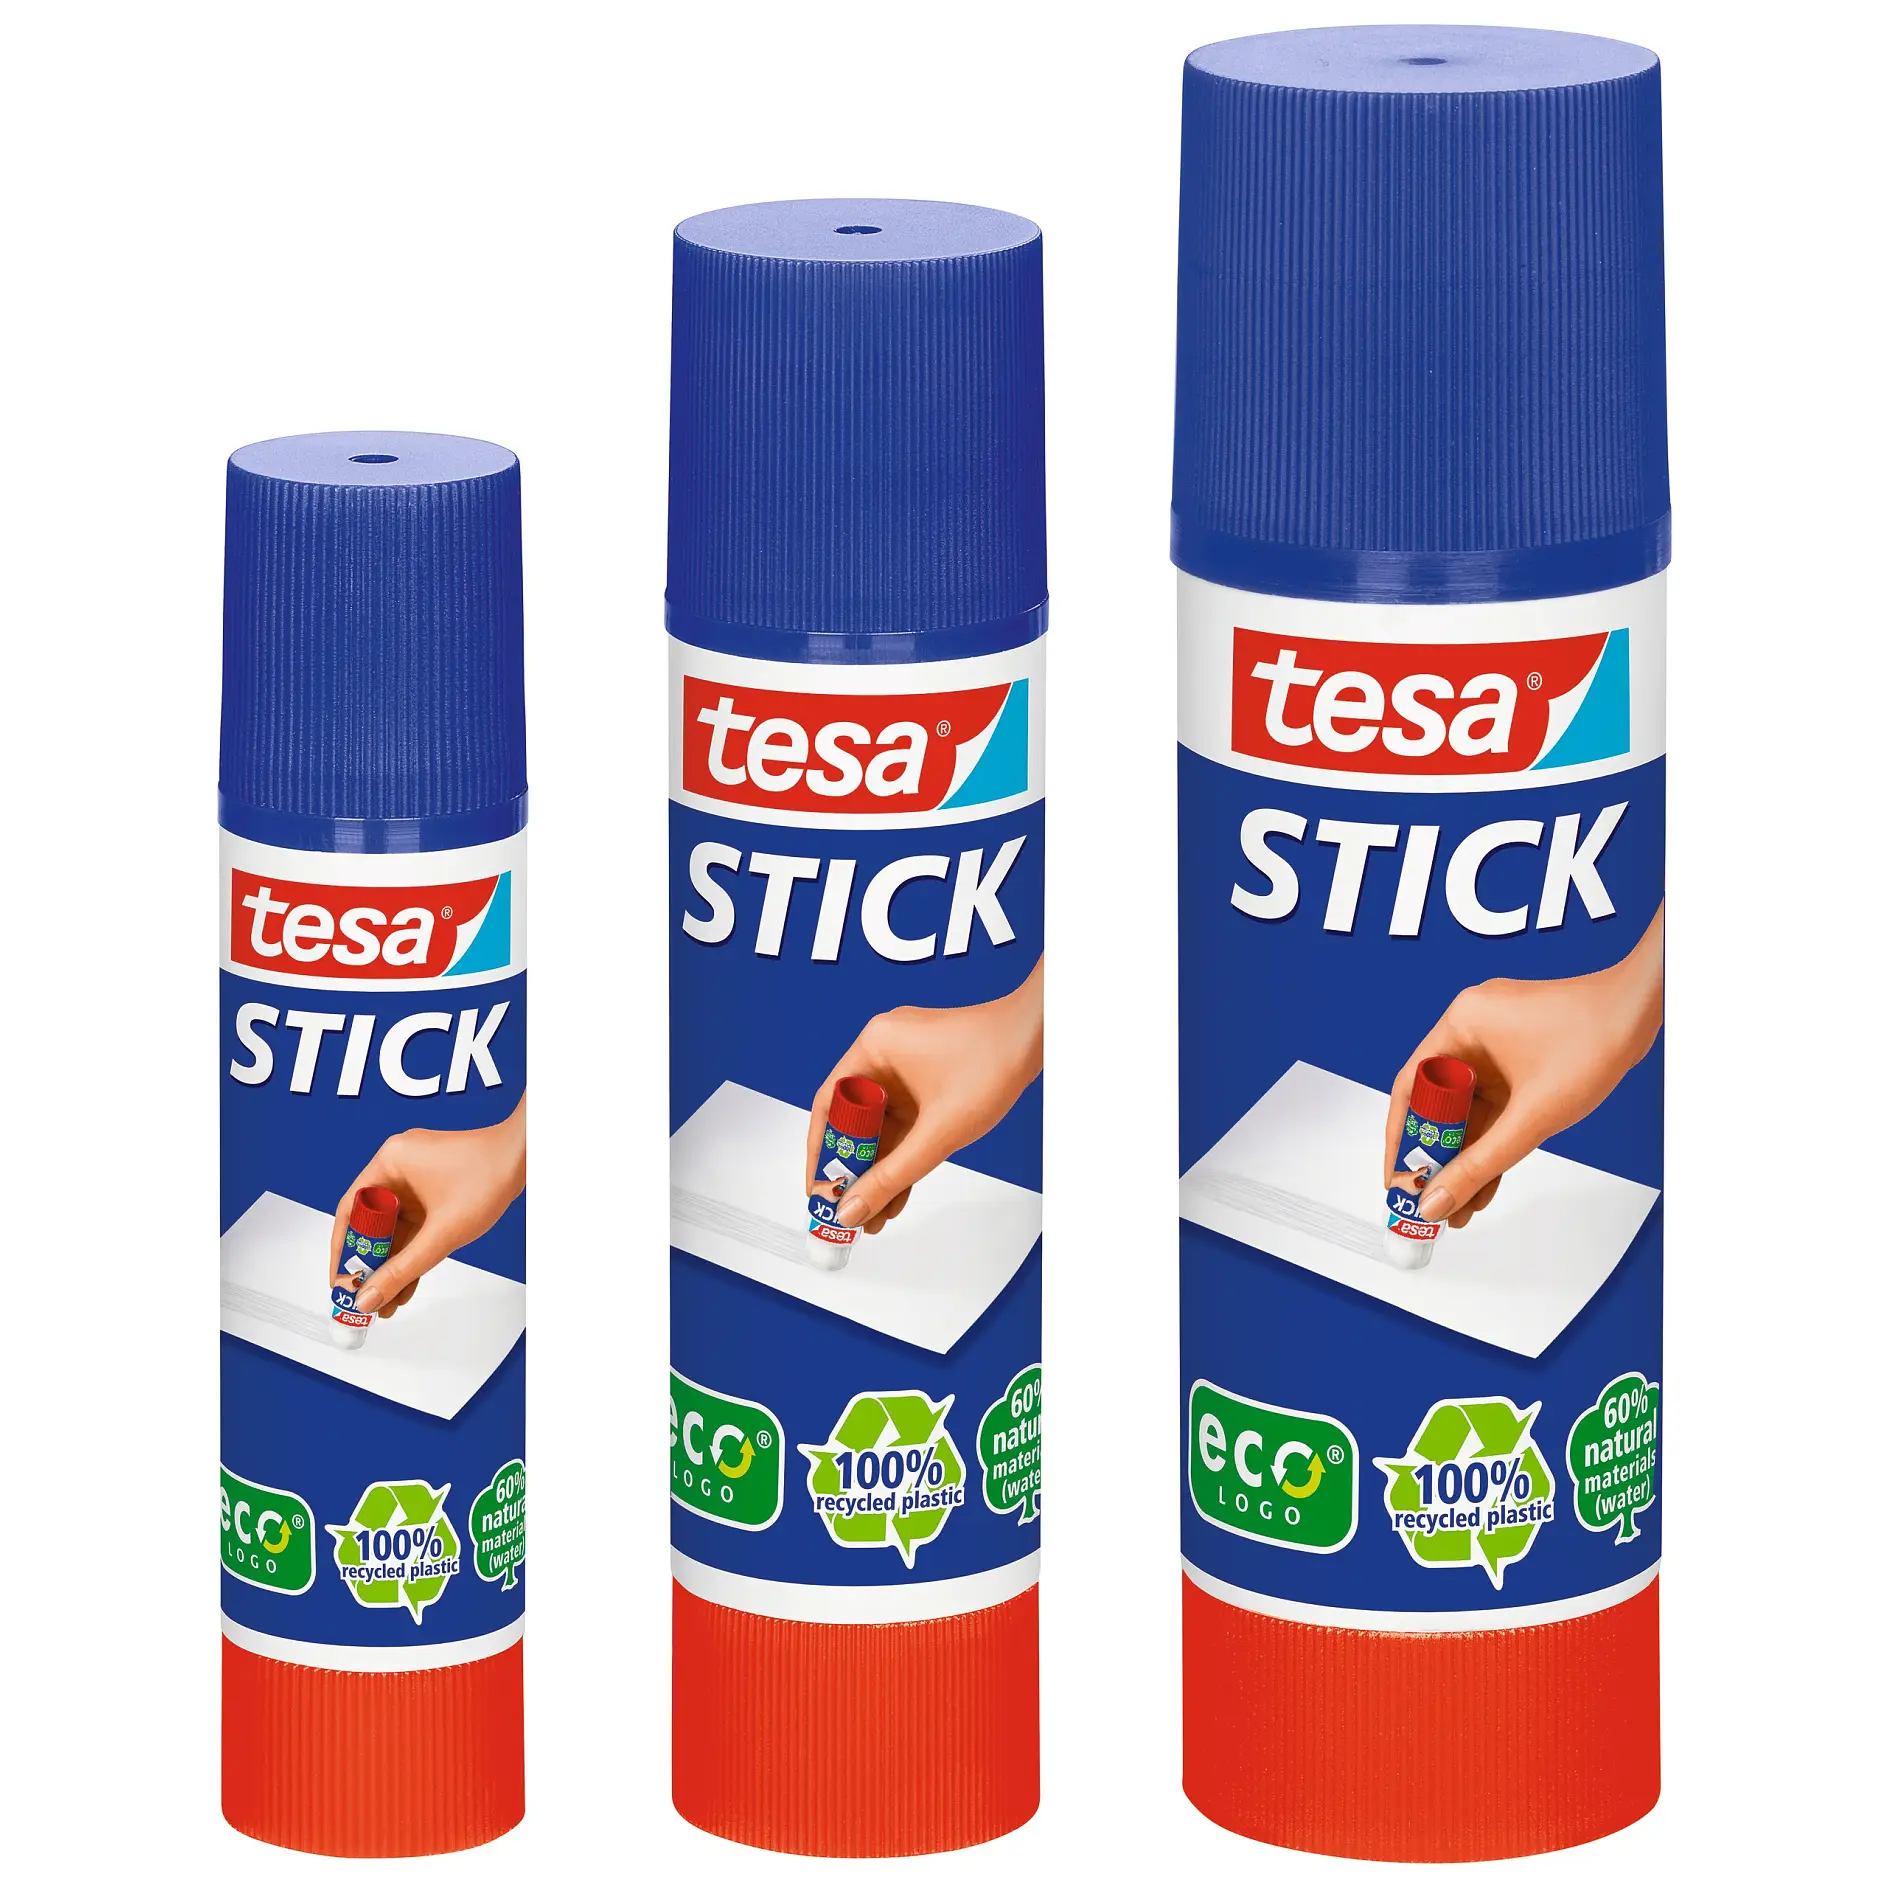 [en-en] tesa Glue stick assortment<br />
[en-en]&nbsp; tesa,Glue,Stick,ecoLogo,,10g,,20g,,40g